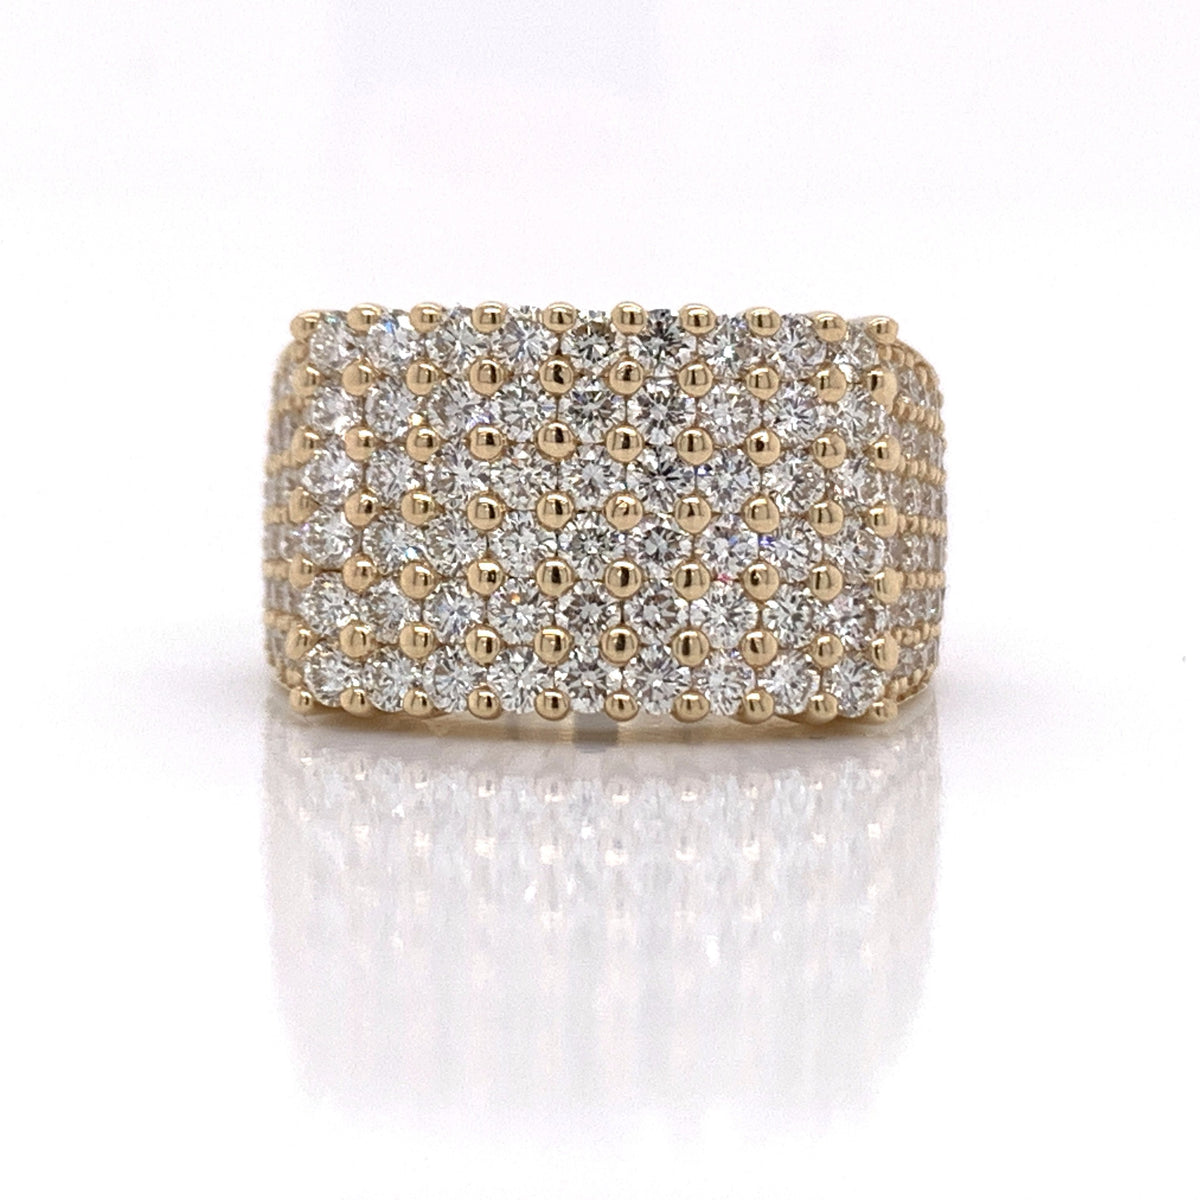 3.75CT Diamond 14K Gold Ring - White Carat Diamonds 